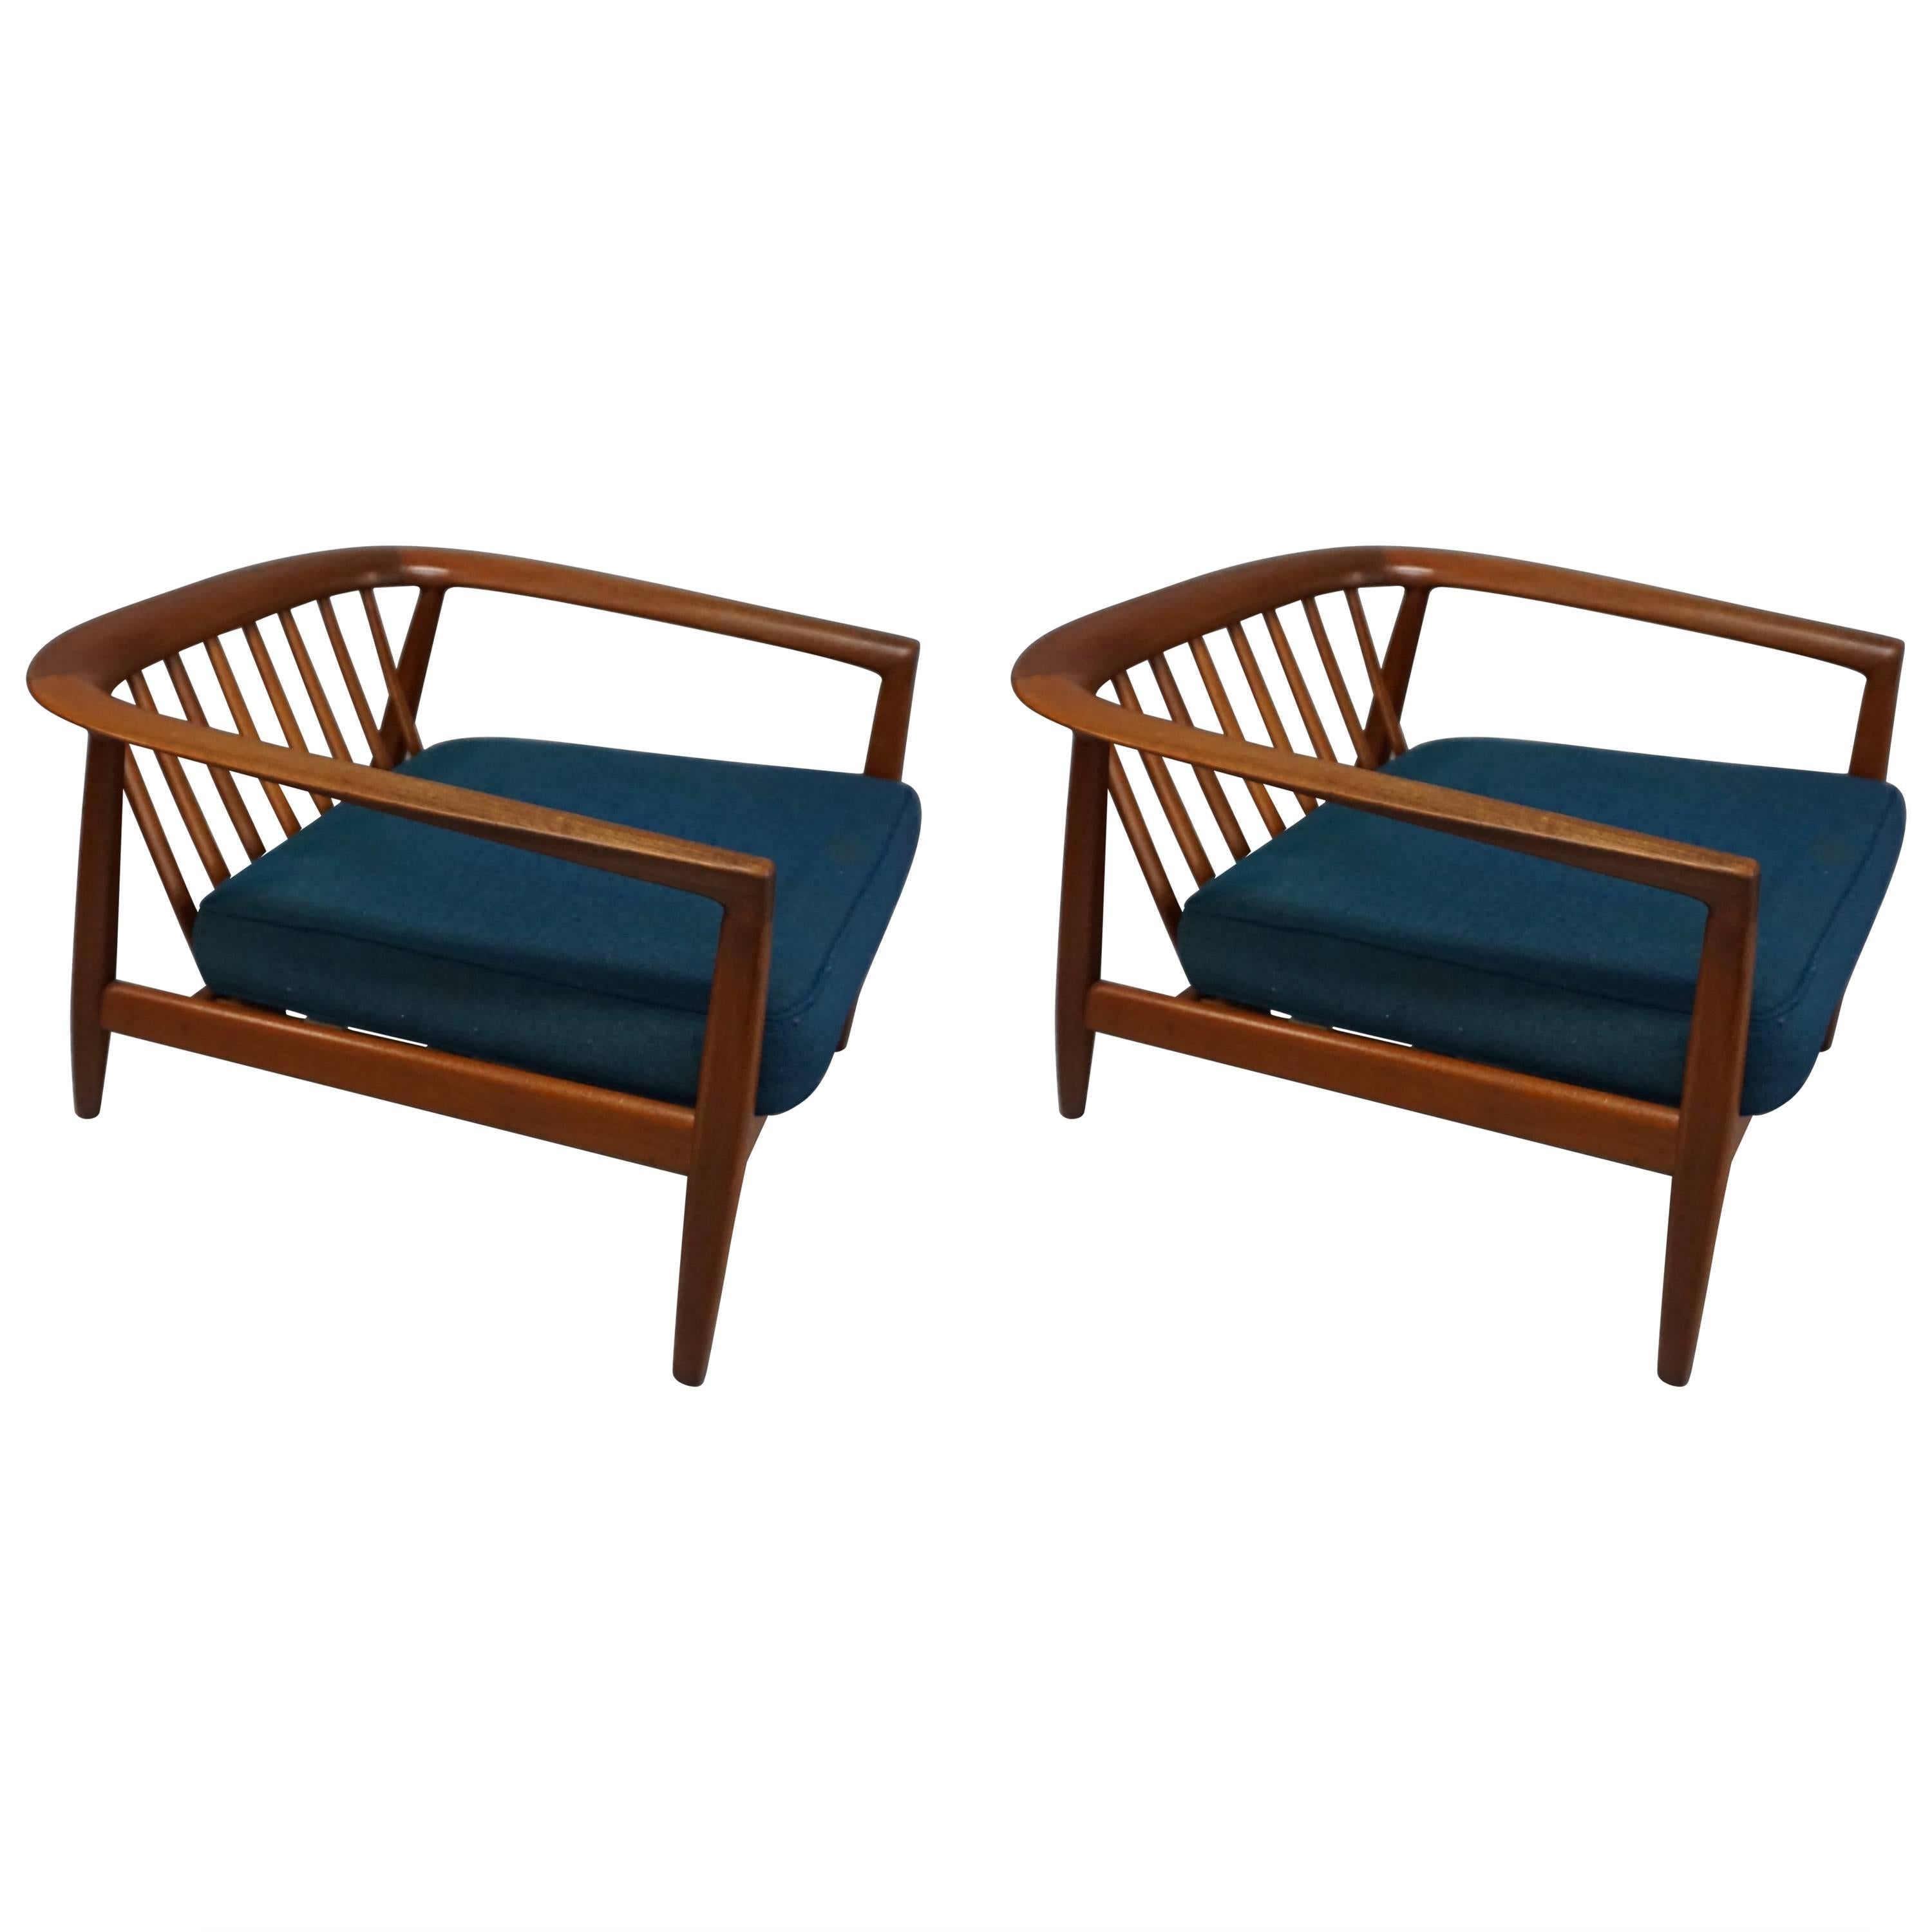 Fantastic Folke Ohlsson for DUX Pair of Teak Lounge Chairs